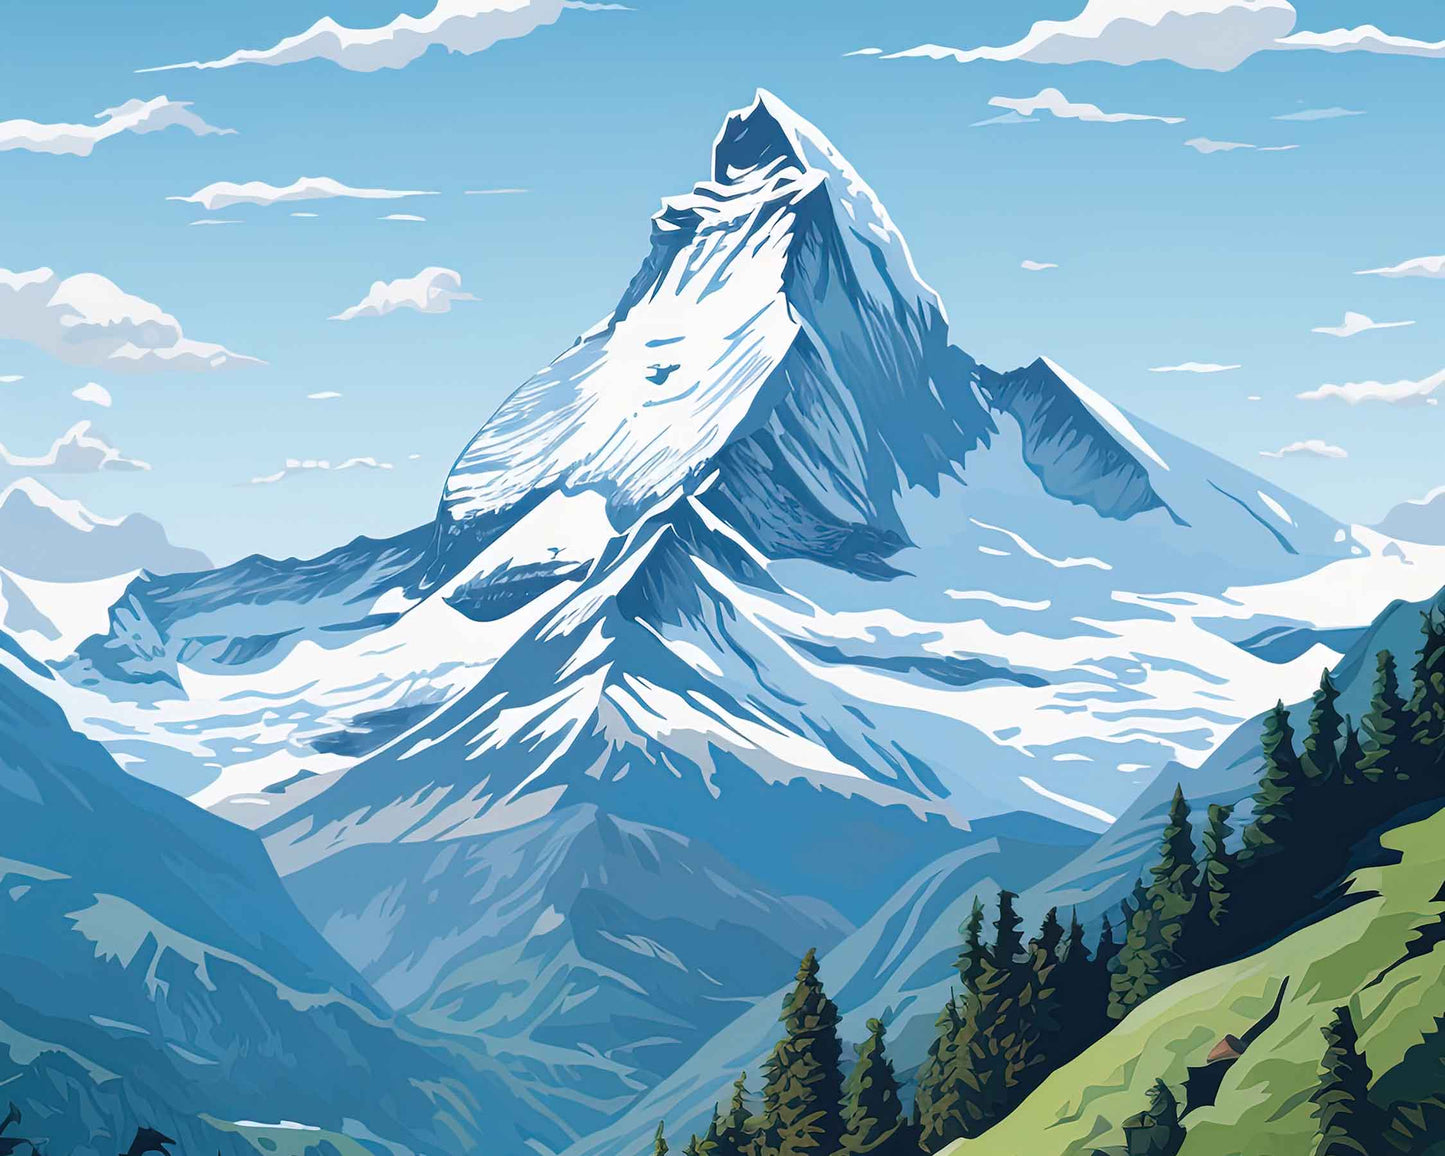 Framed Image of Swiss Alps Switzerland Wall Art Travel Print Posters Illustration